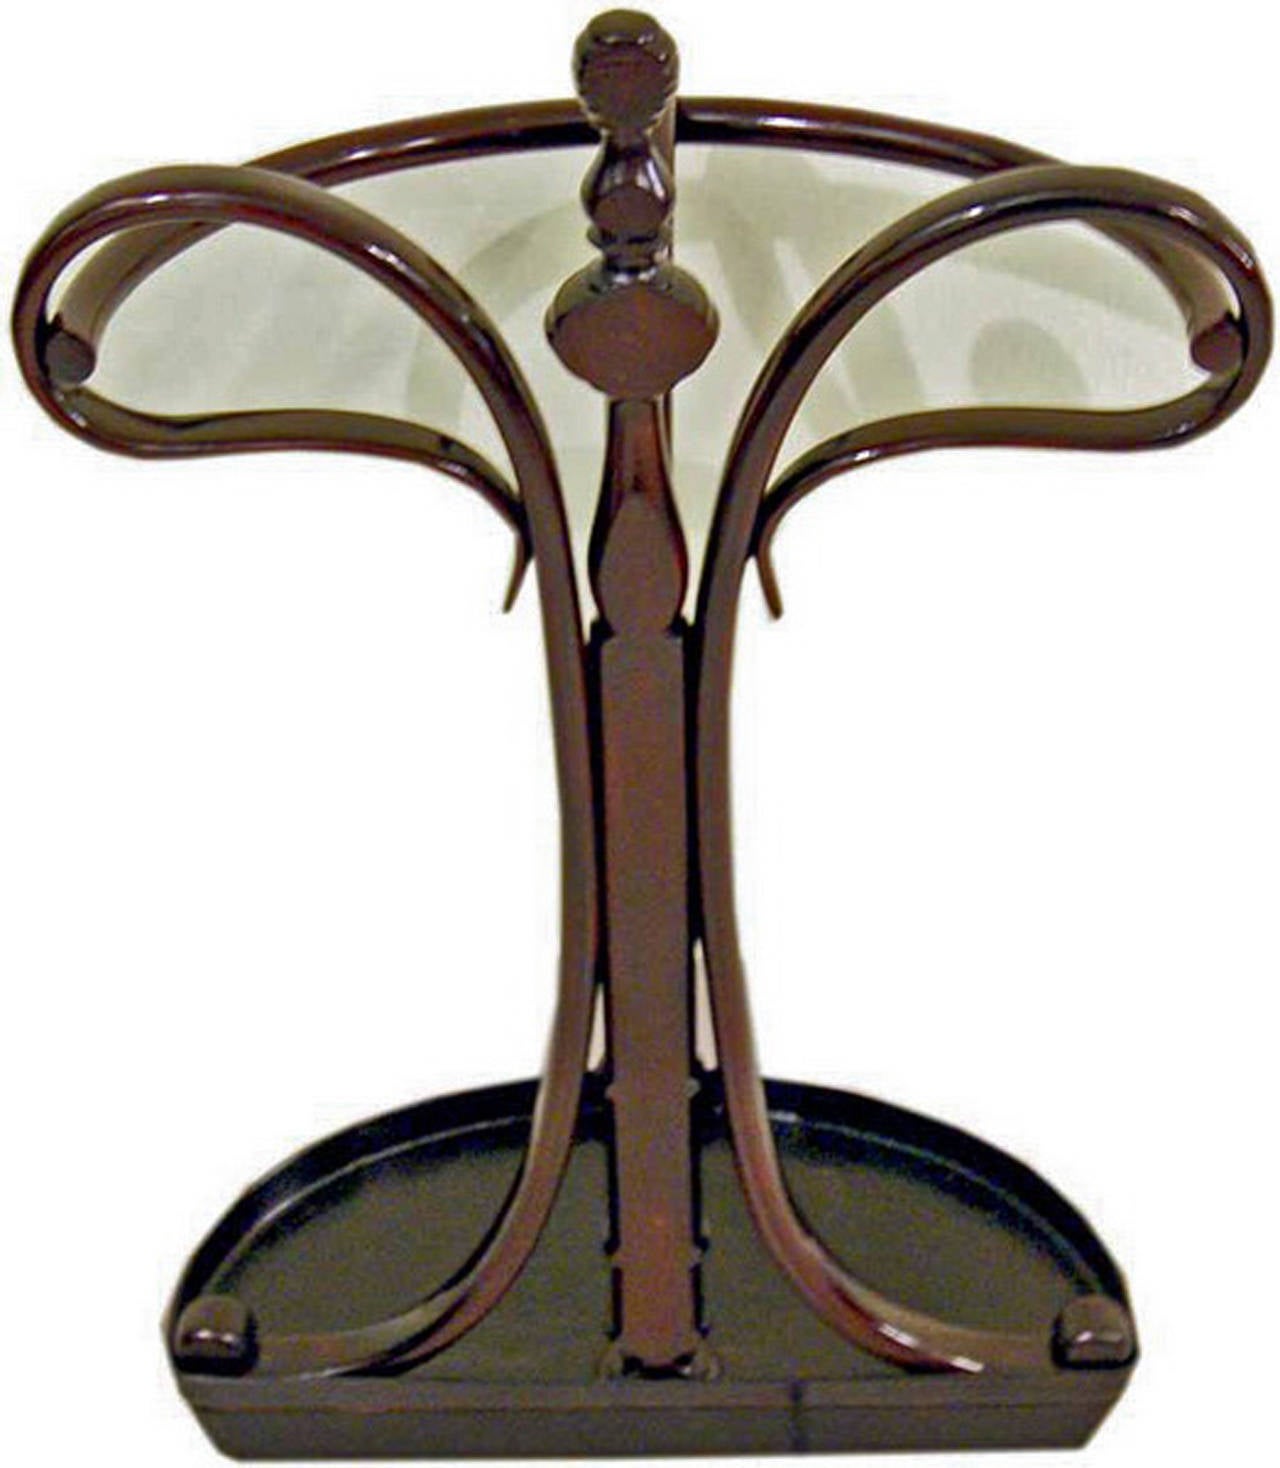 Art Nouveau Thonet Demi-lune Shaped Umbrella Stand Model 1 C. 1905